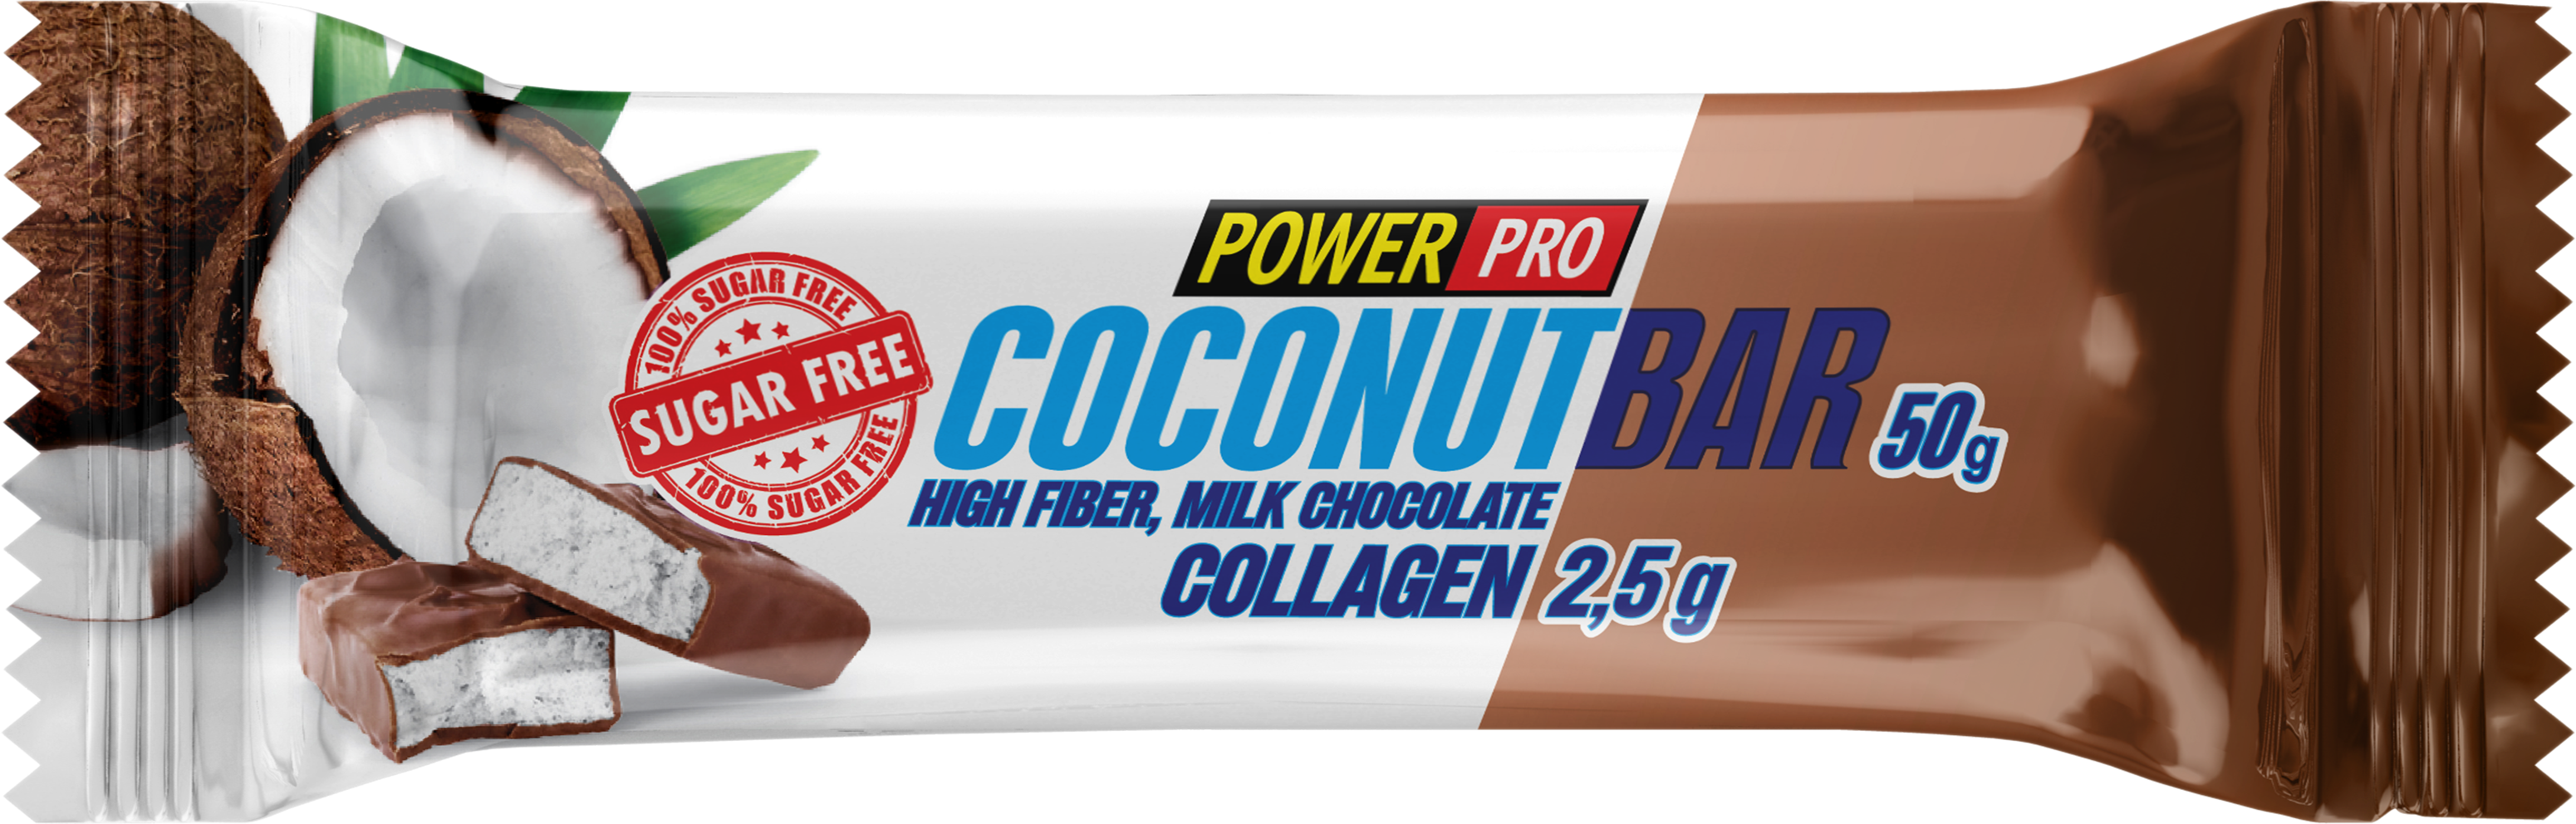 Батончик с кокосом без сахара. Power Pro Coconut Bar 50 г. Power Pro батончики. Power Pro Coconut Bar батончики. Батончик с кокосом Coconut с шоколадом.